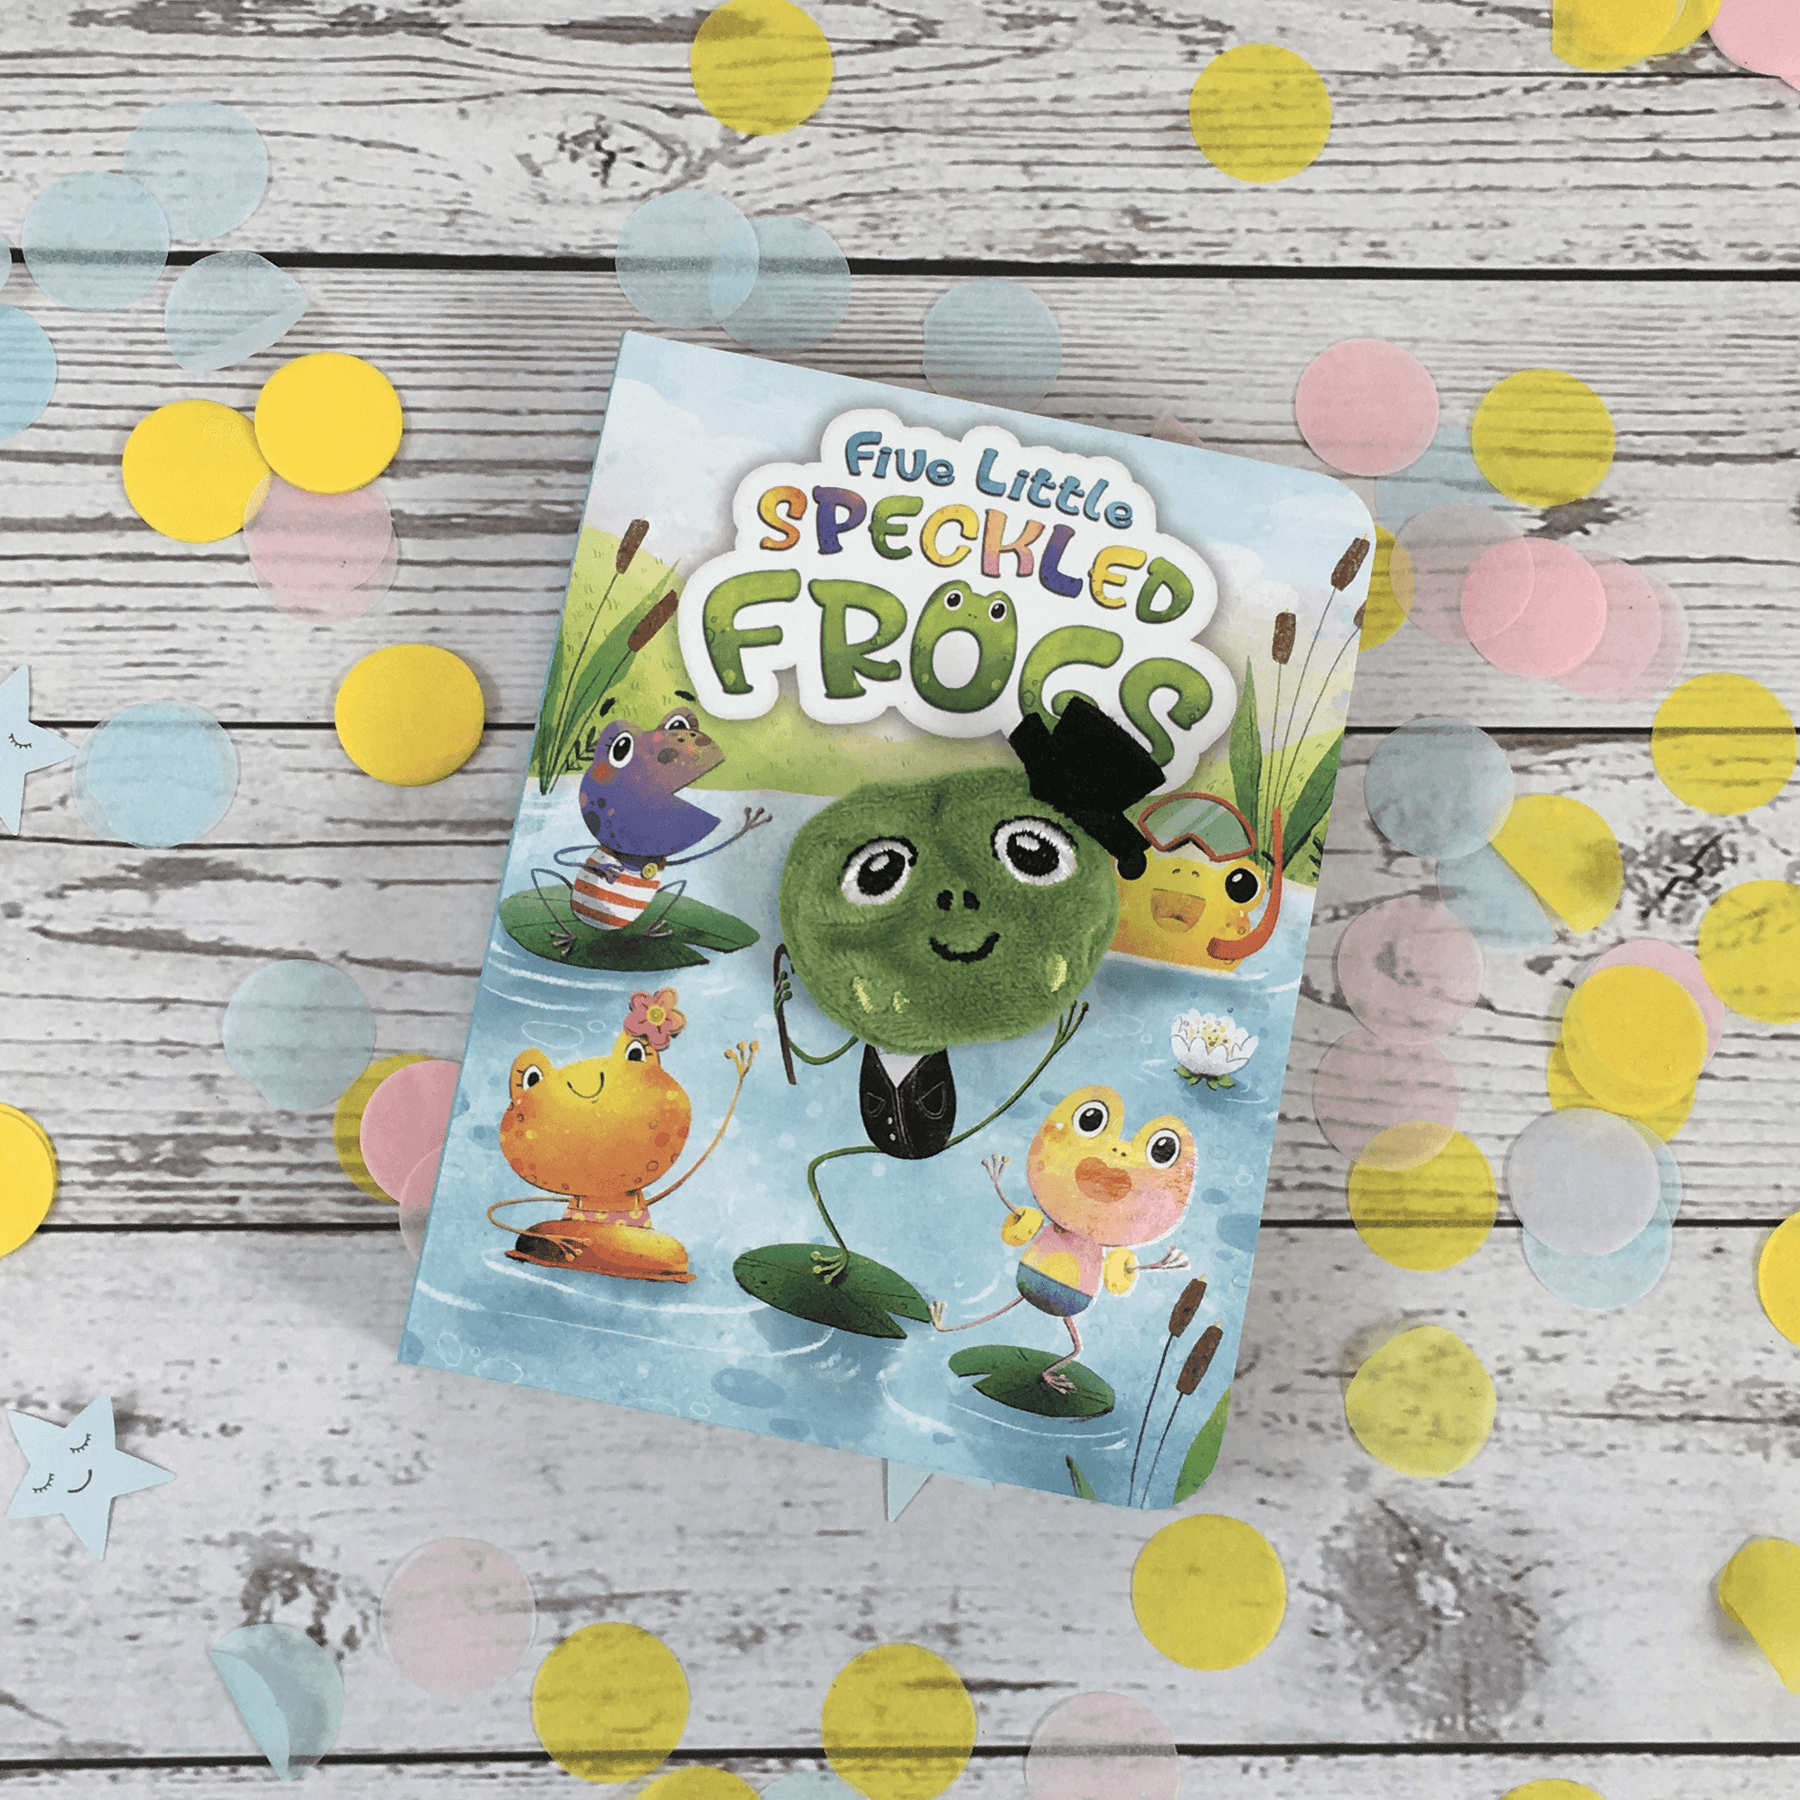 Little Hippo Books Five Little Speckled Frogs Finger Puppet Book - Little Miss Muffin Children & Home